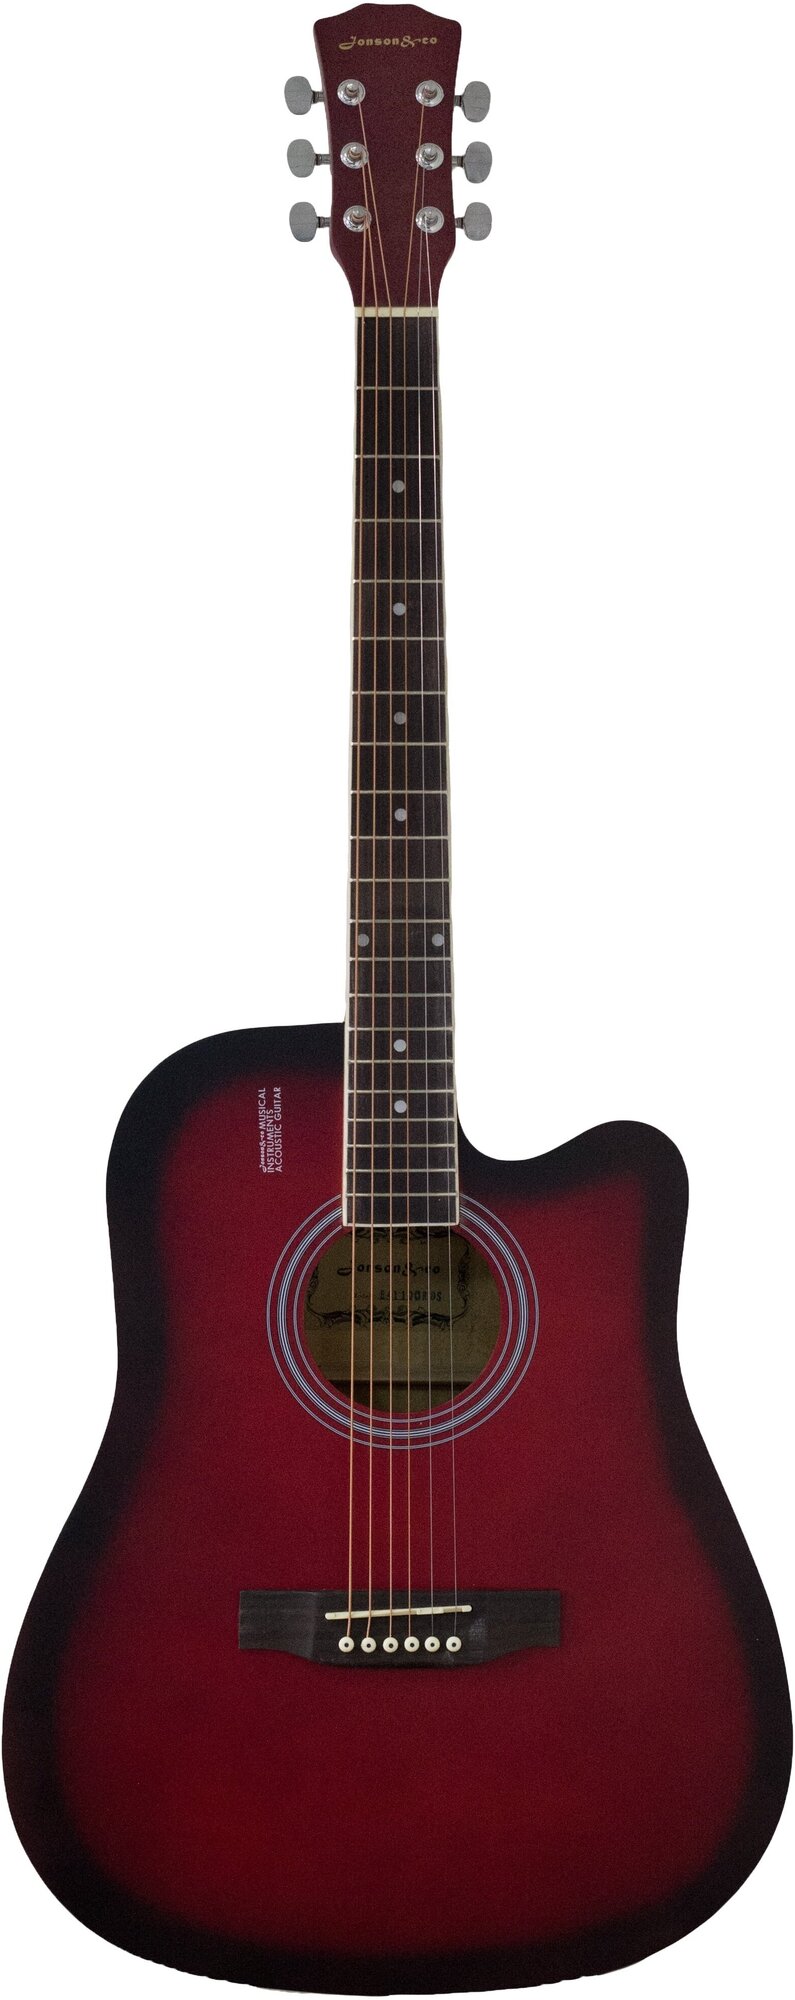 Акустическая гитара матовая, красная. Размер 41 дюйм Jordani E4120 RDS